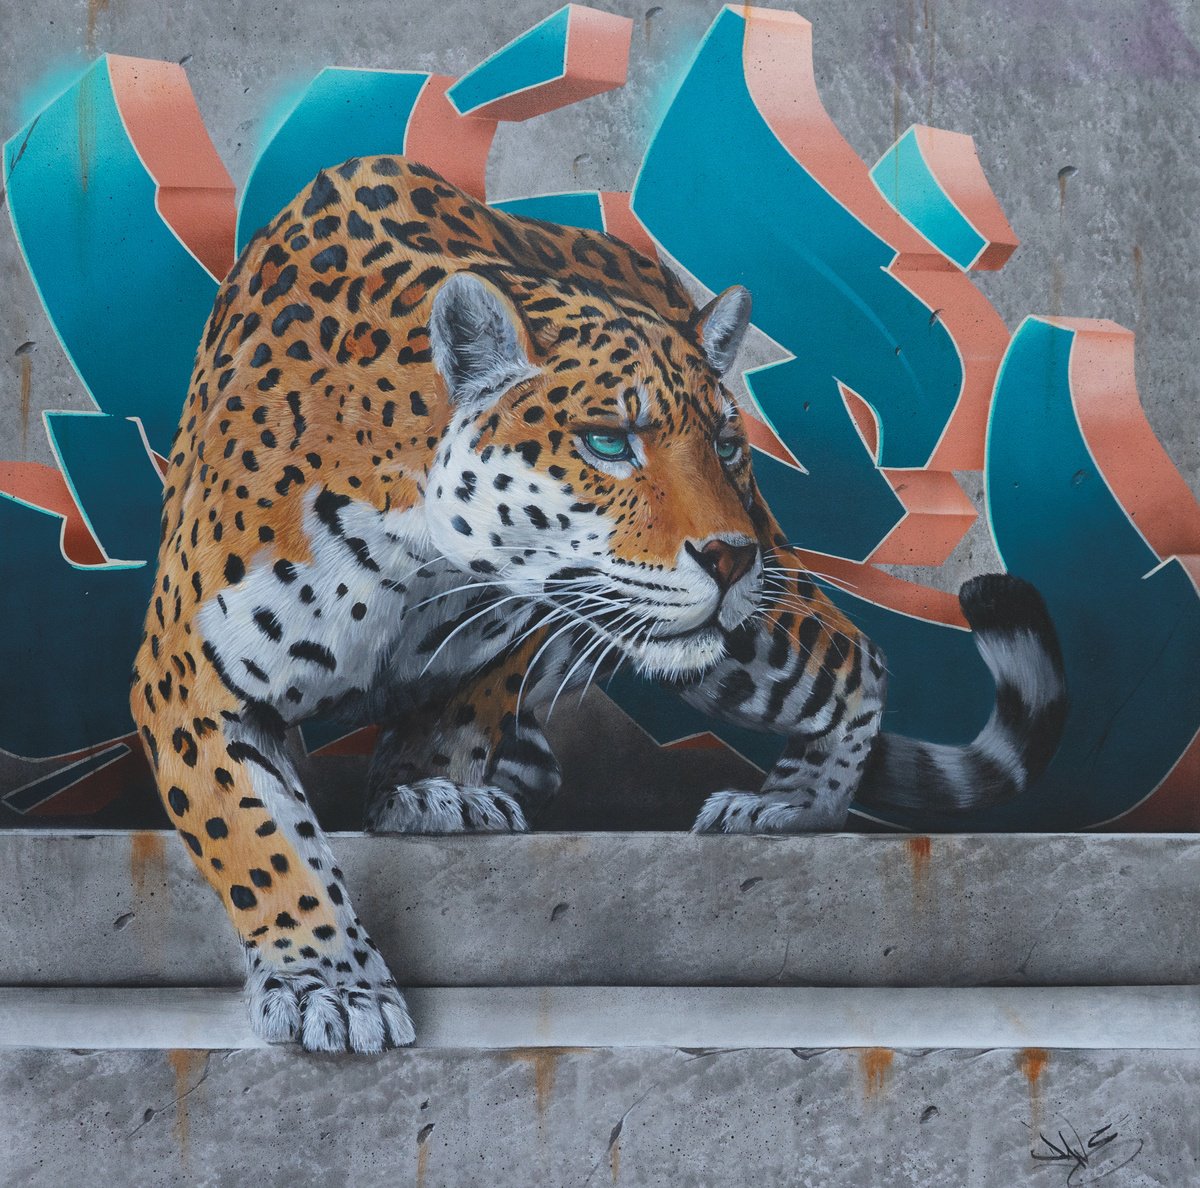 The Jaguar by Dave Baranes